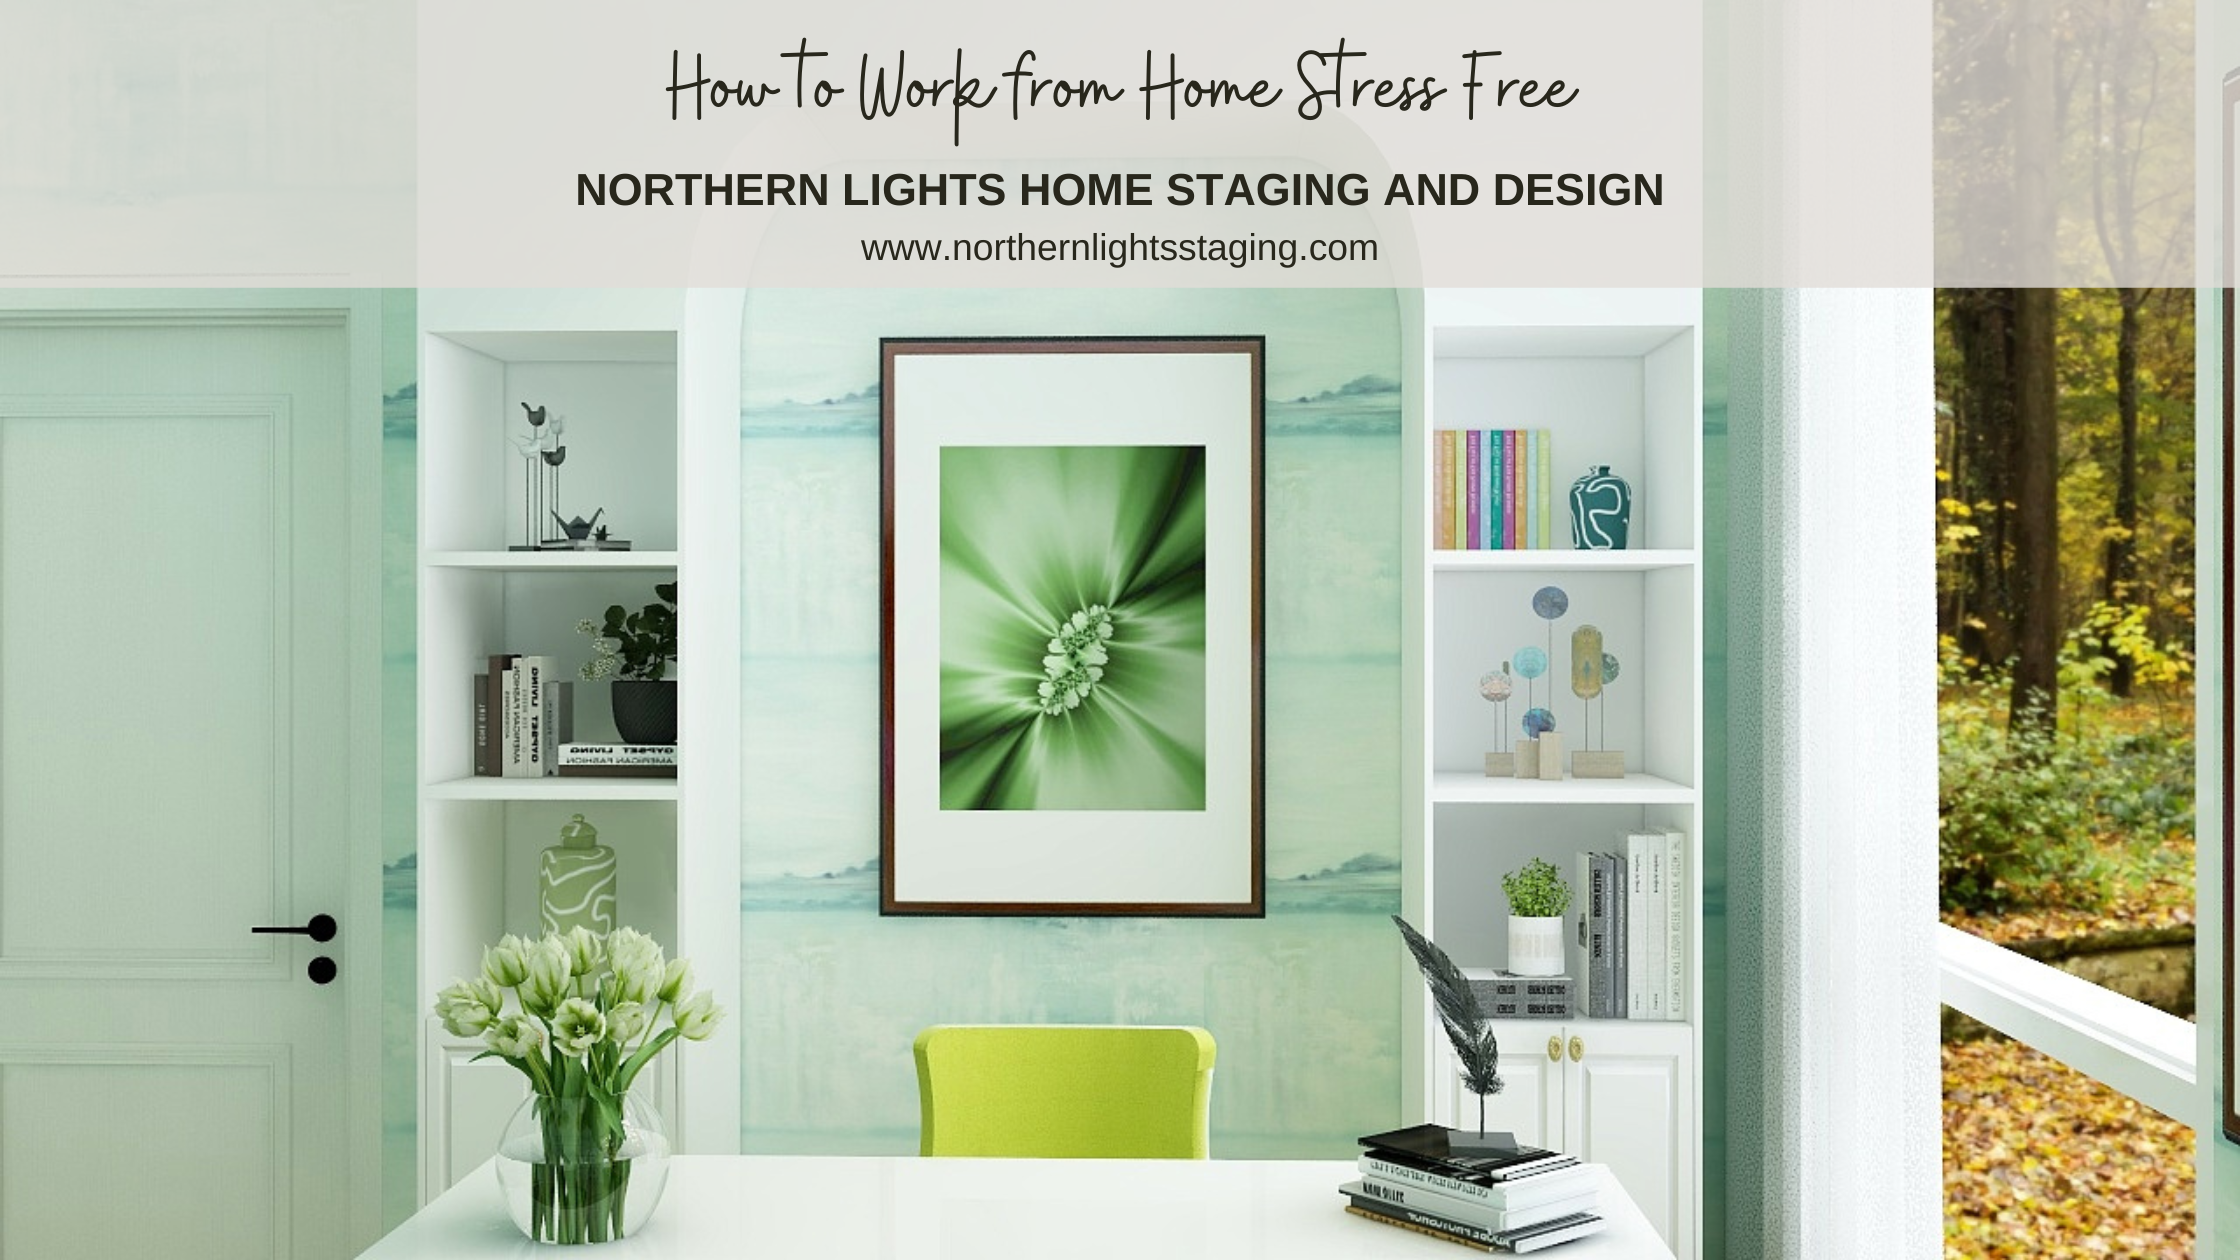 https://northernlightsstaging.com/wp-content/uploads/2020/04/work_home_stress_free-1.png